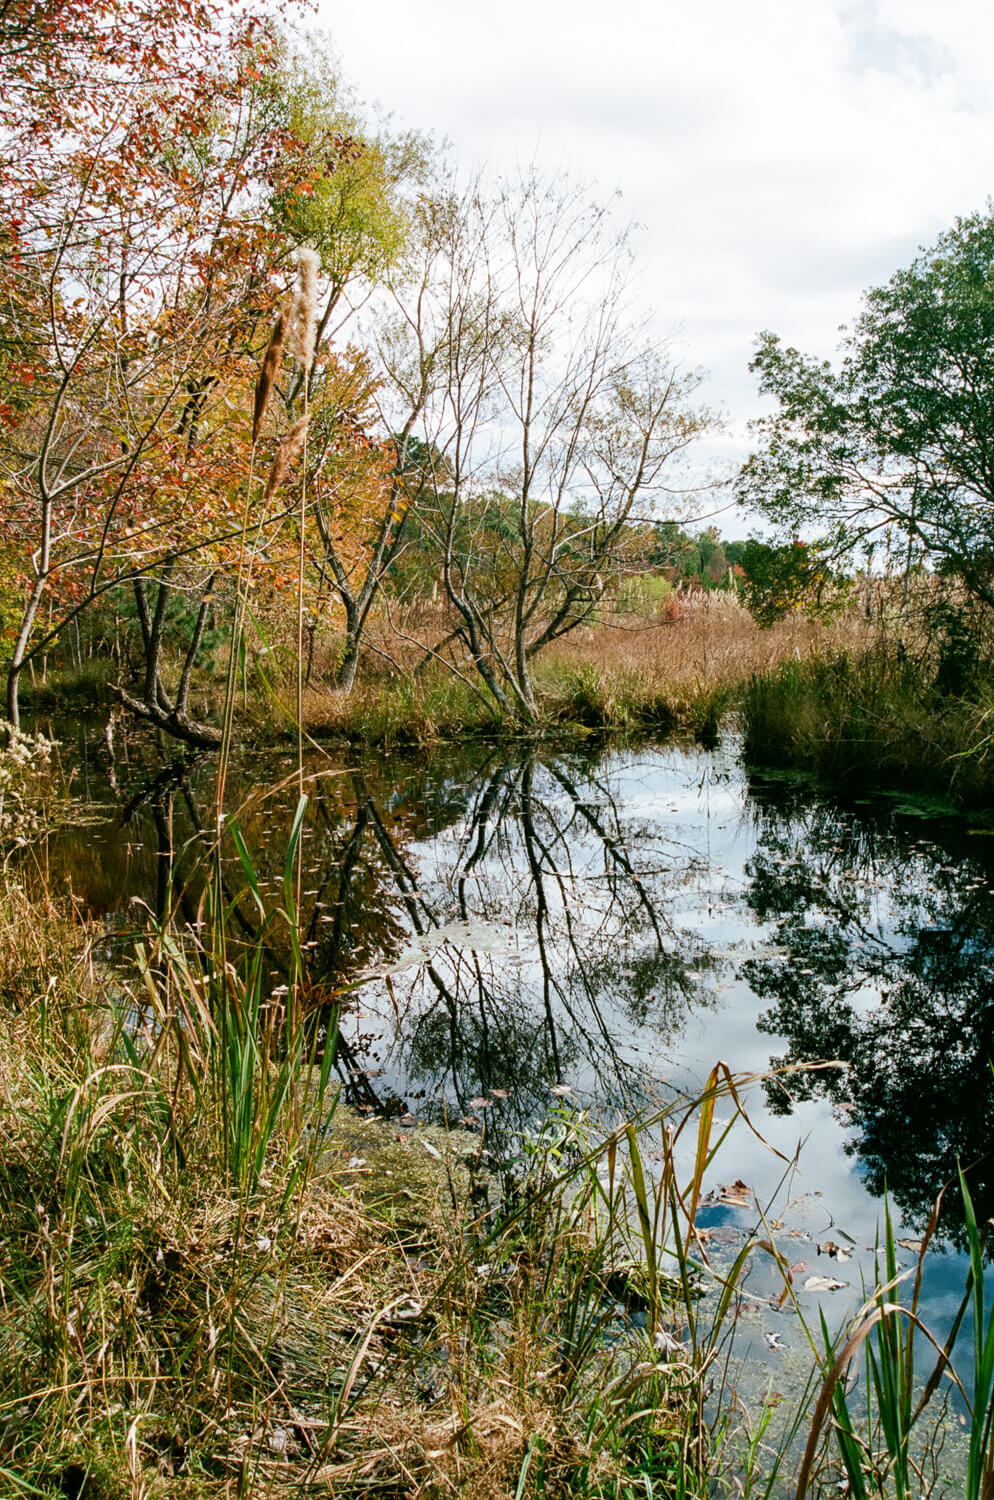 Quiet pond - October 25 1:39 PM